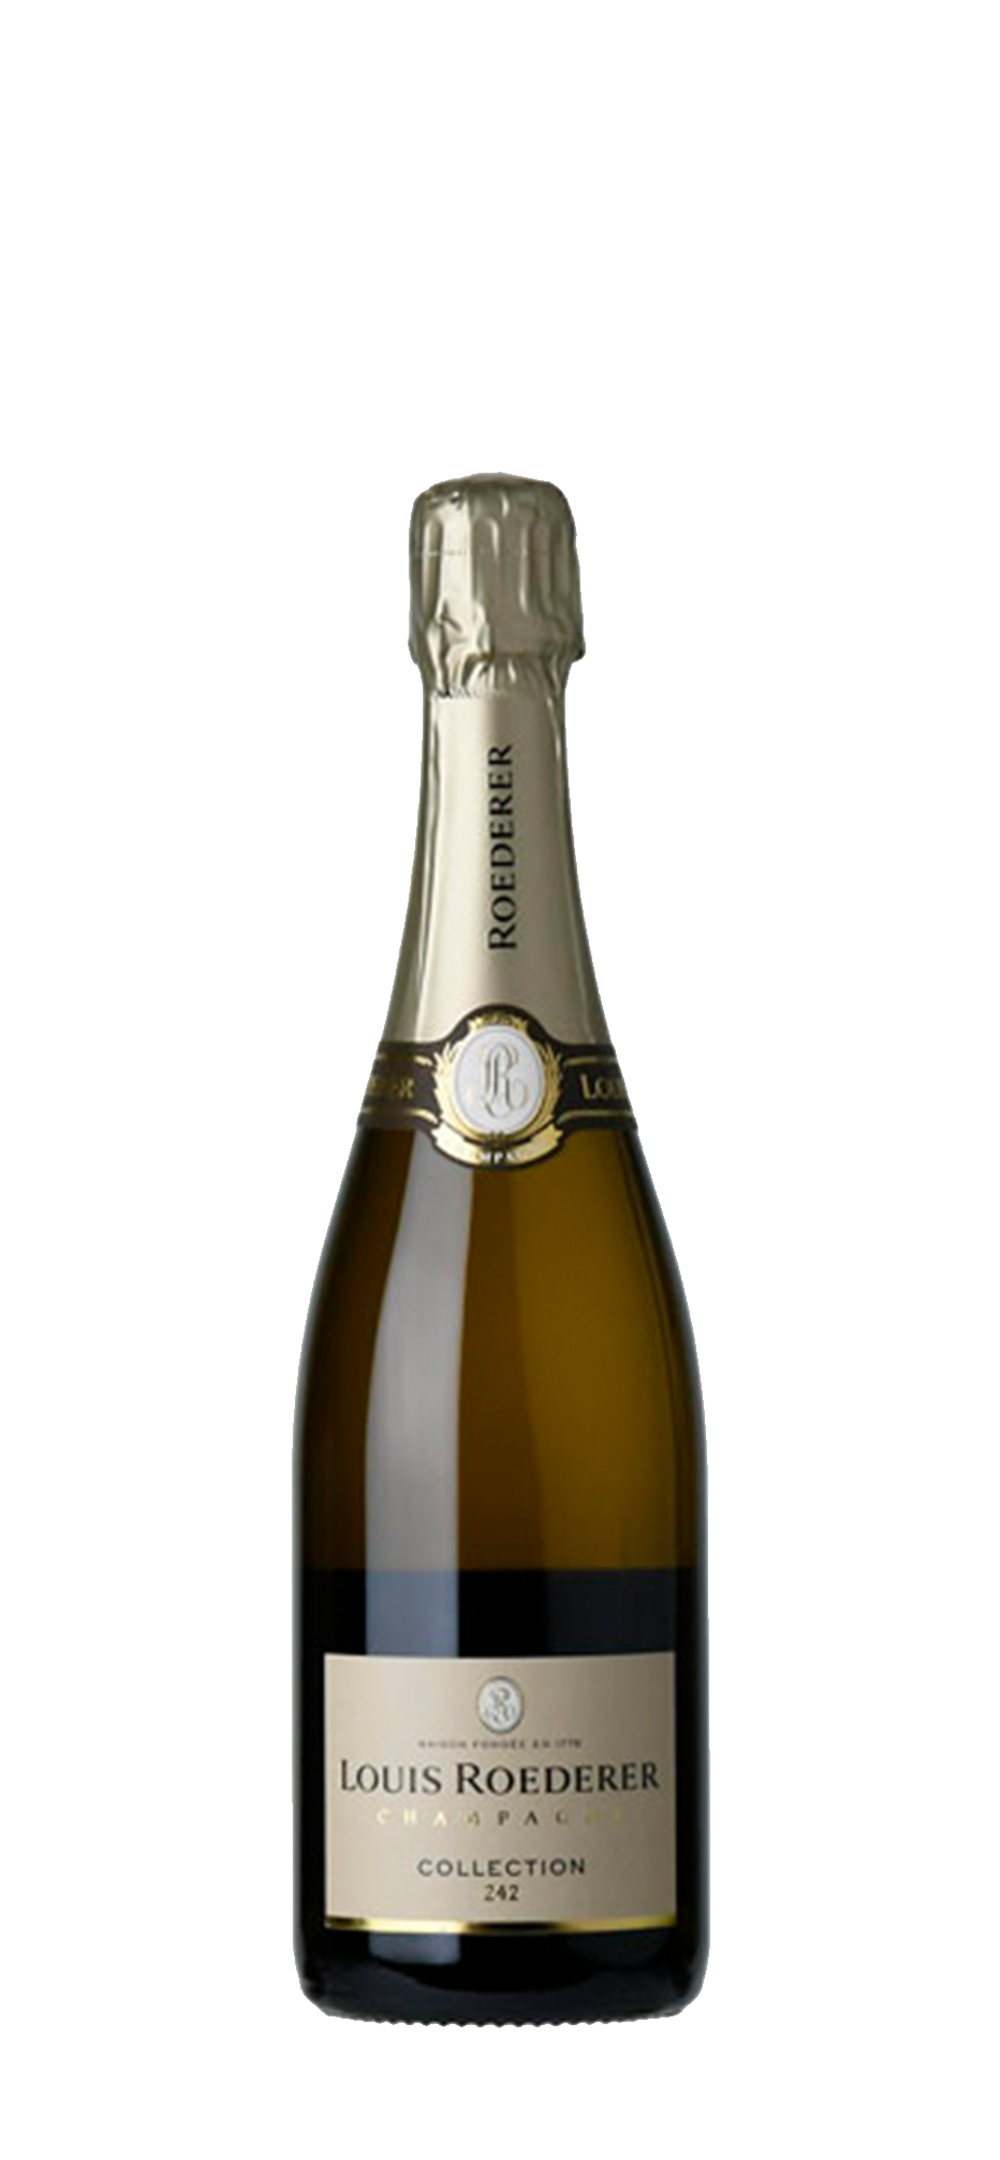 LOUIS ROEDERER Champagne Brut Premier Collection 242